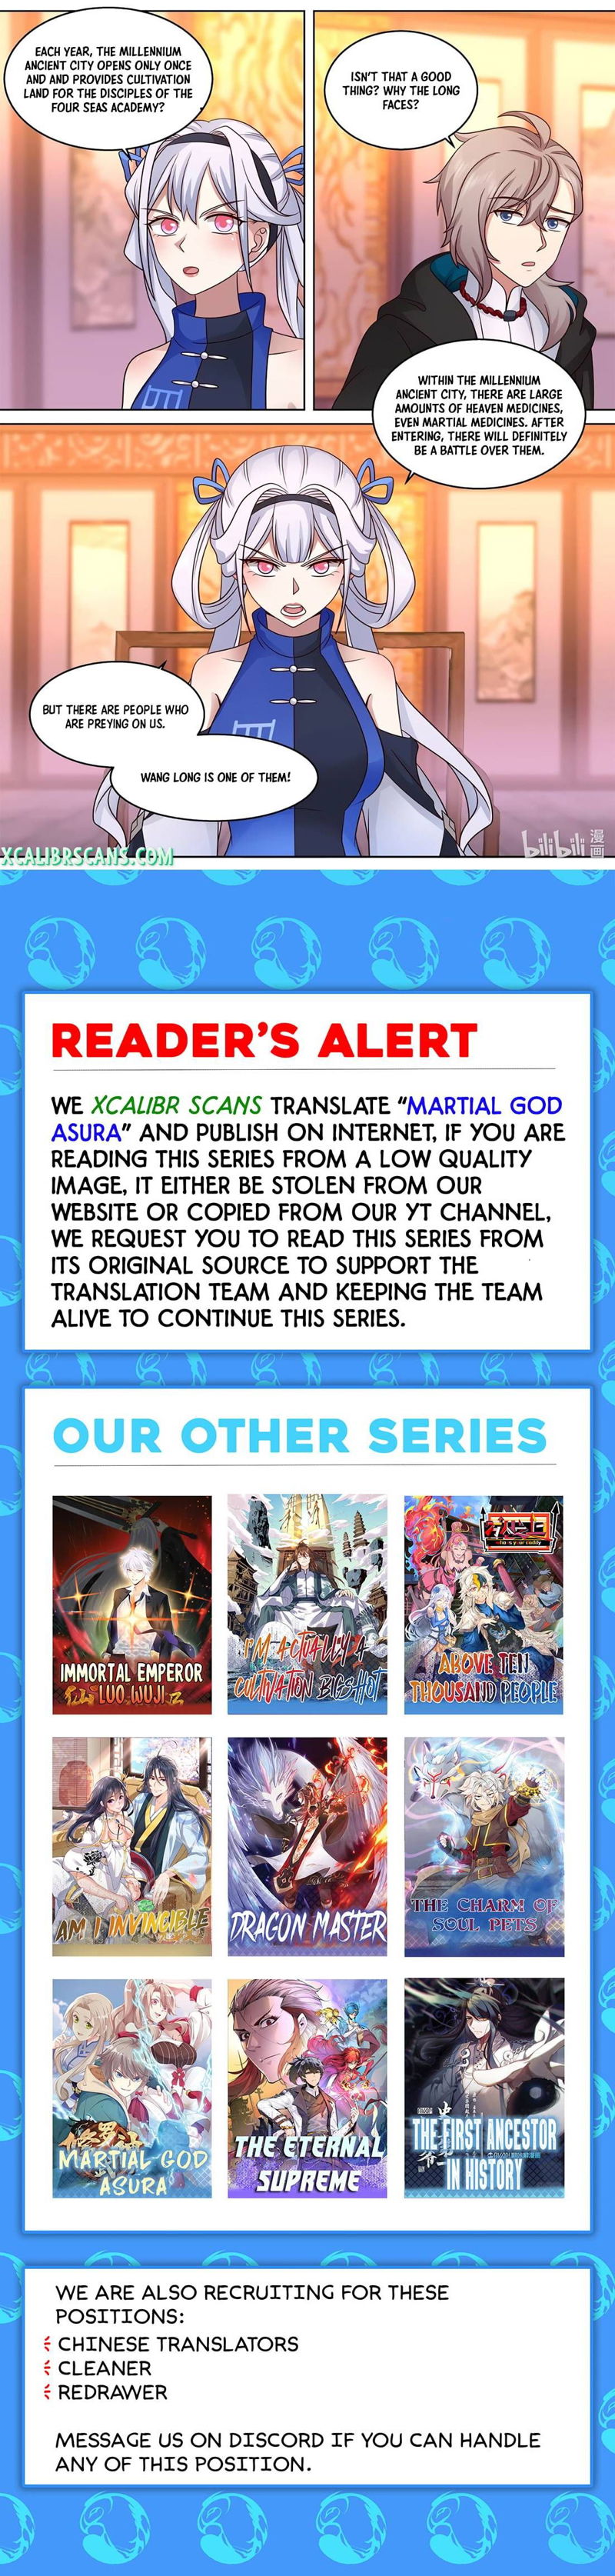 Martial God Asura Chapter 490 page 10